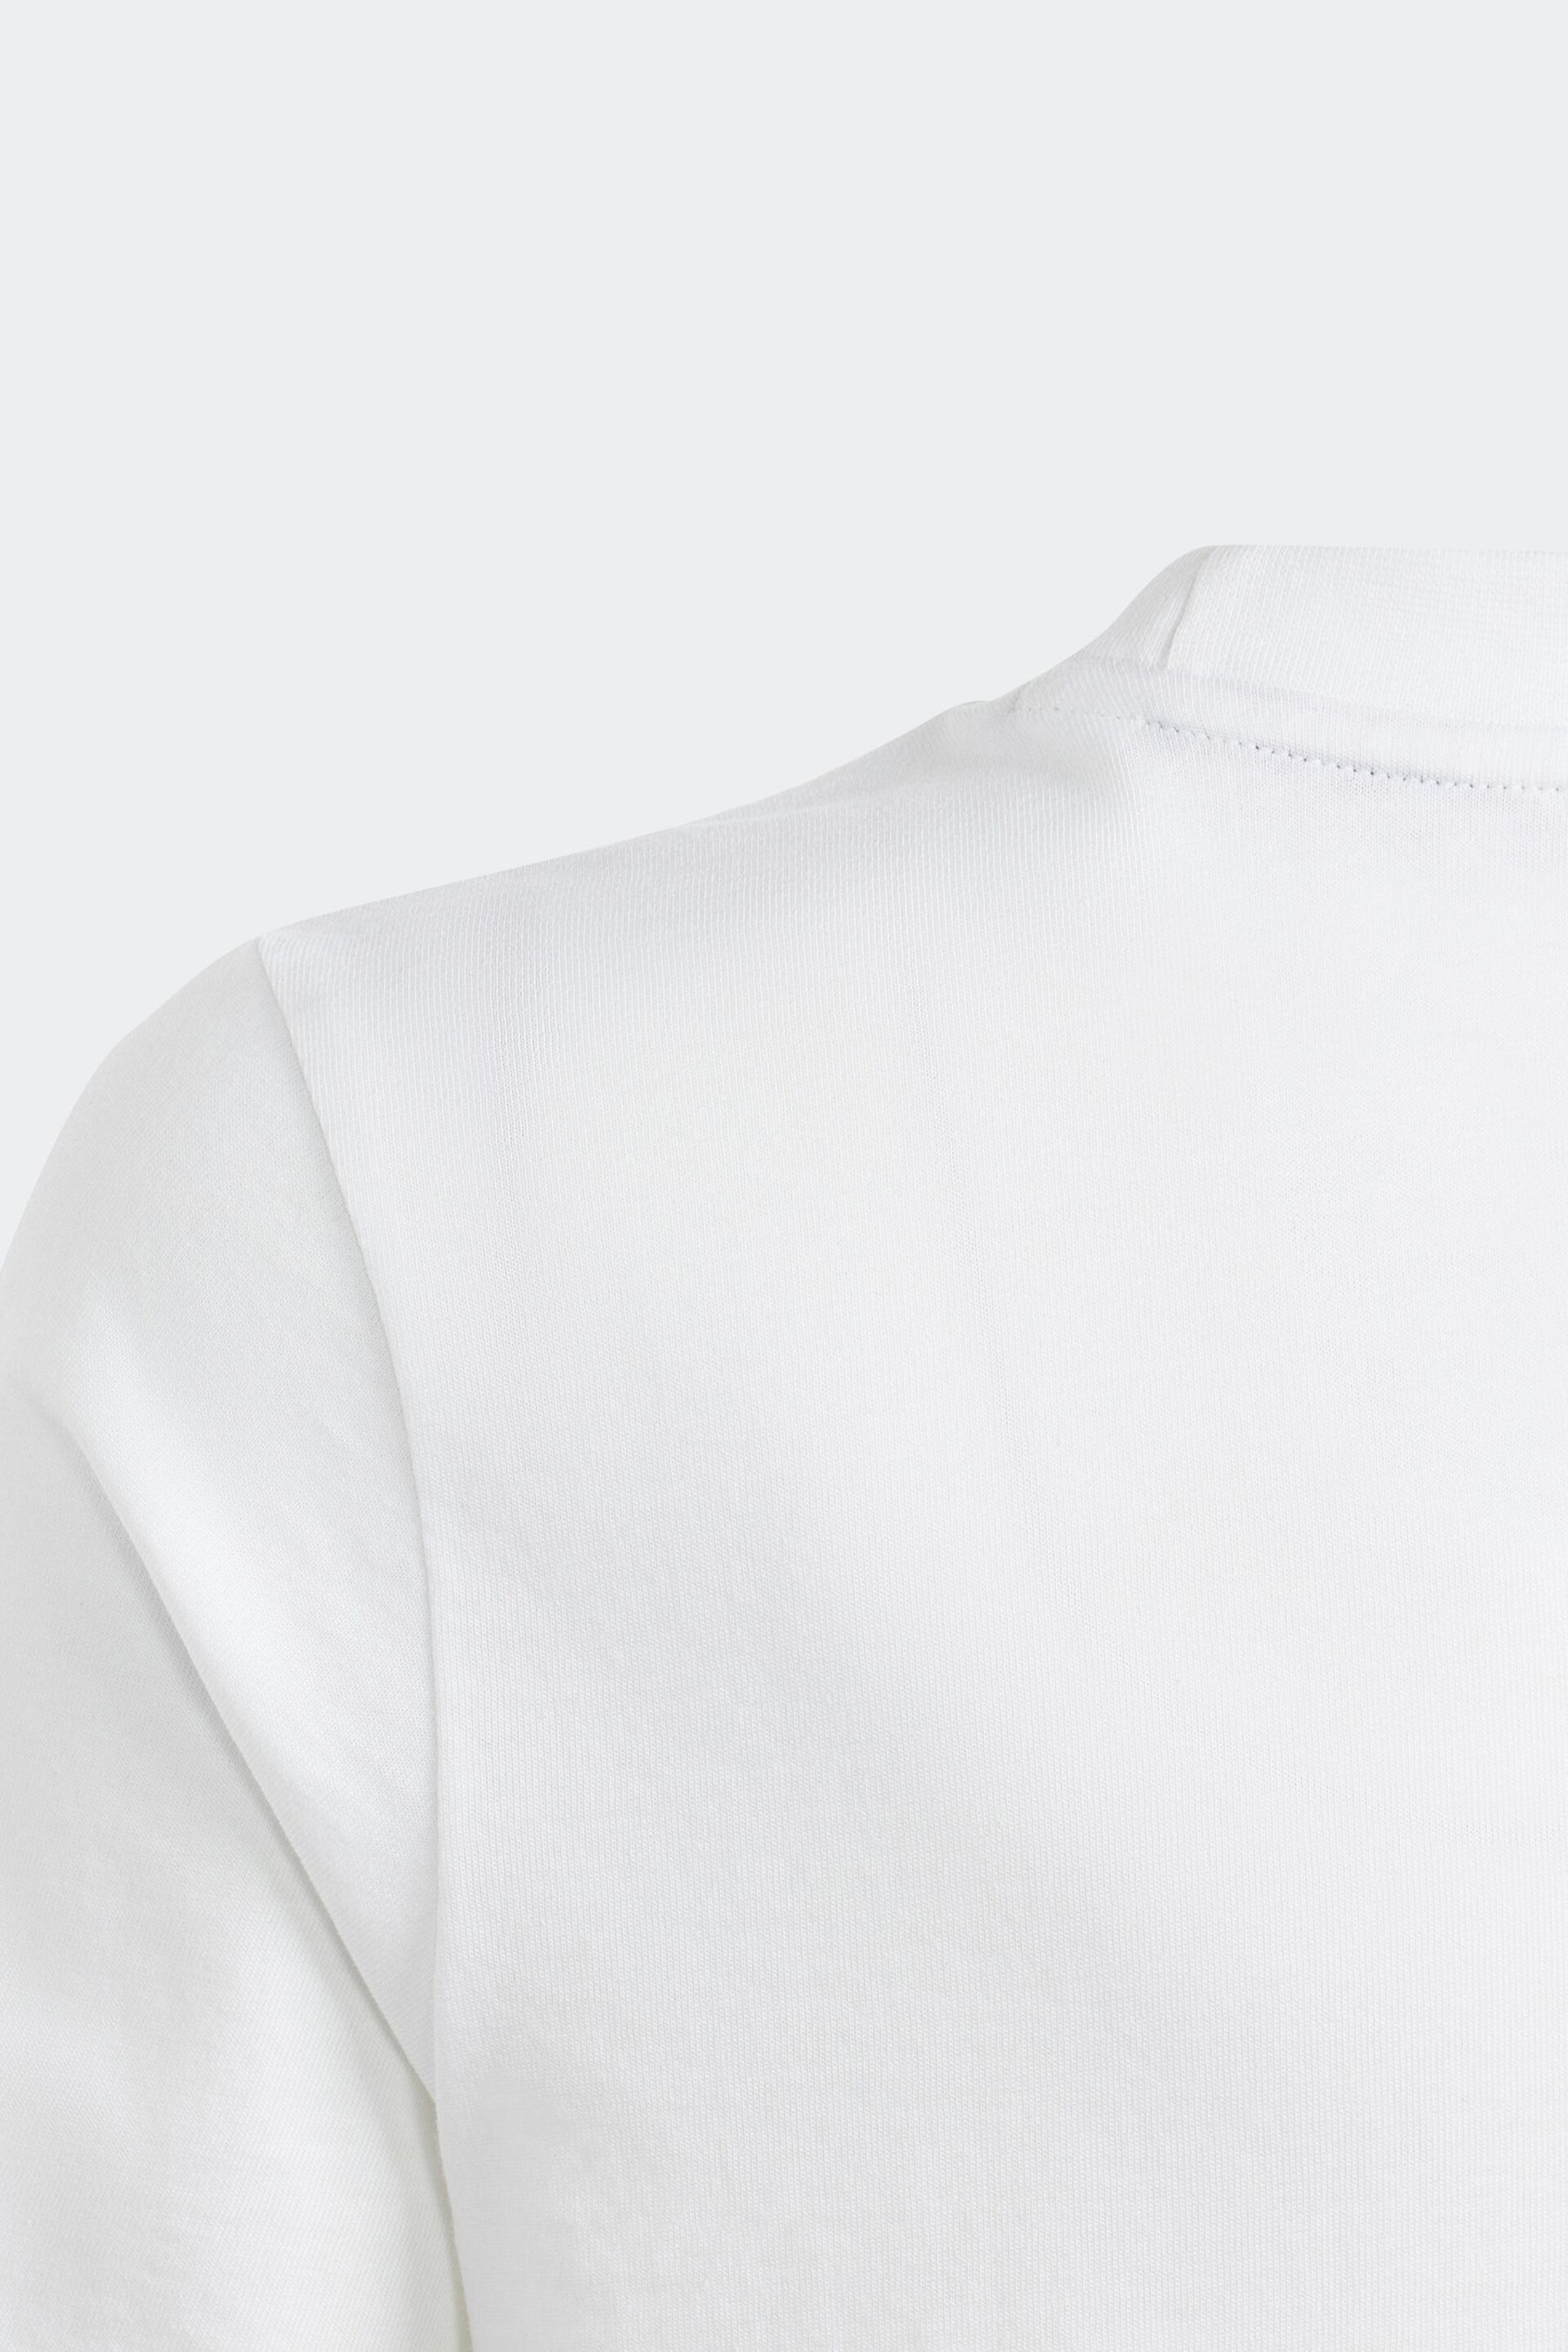 adidas White Sportswear Essentials Small Logo Cotton T-Shirt - Image 4 of 6